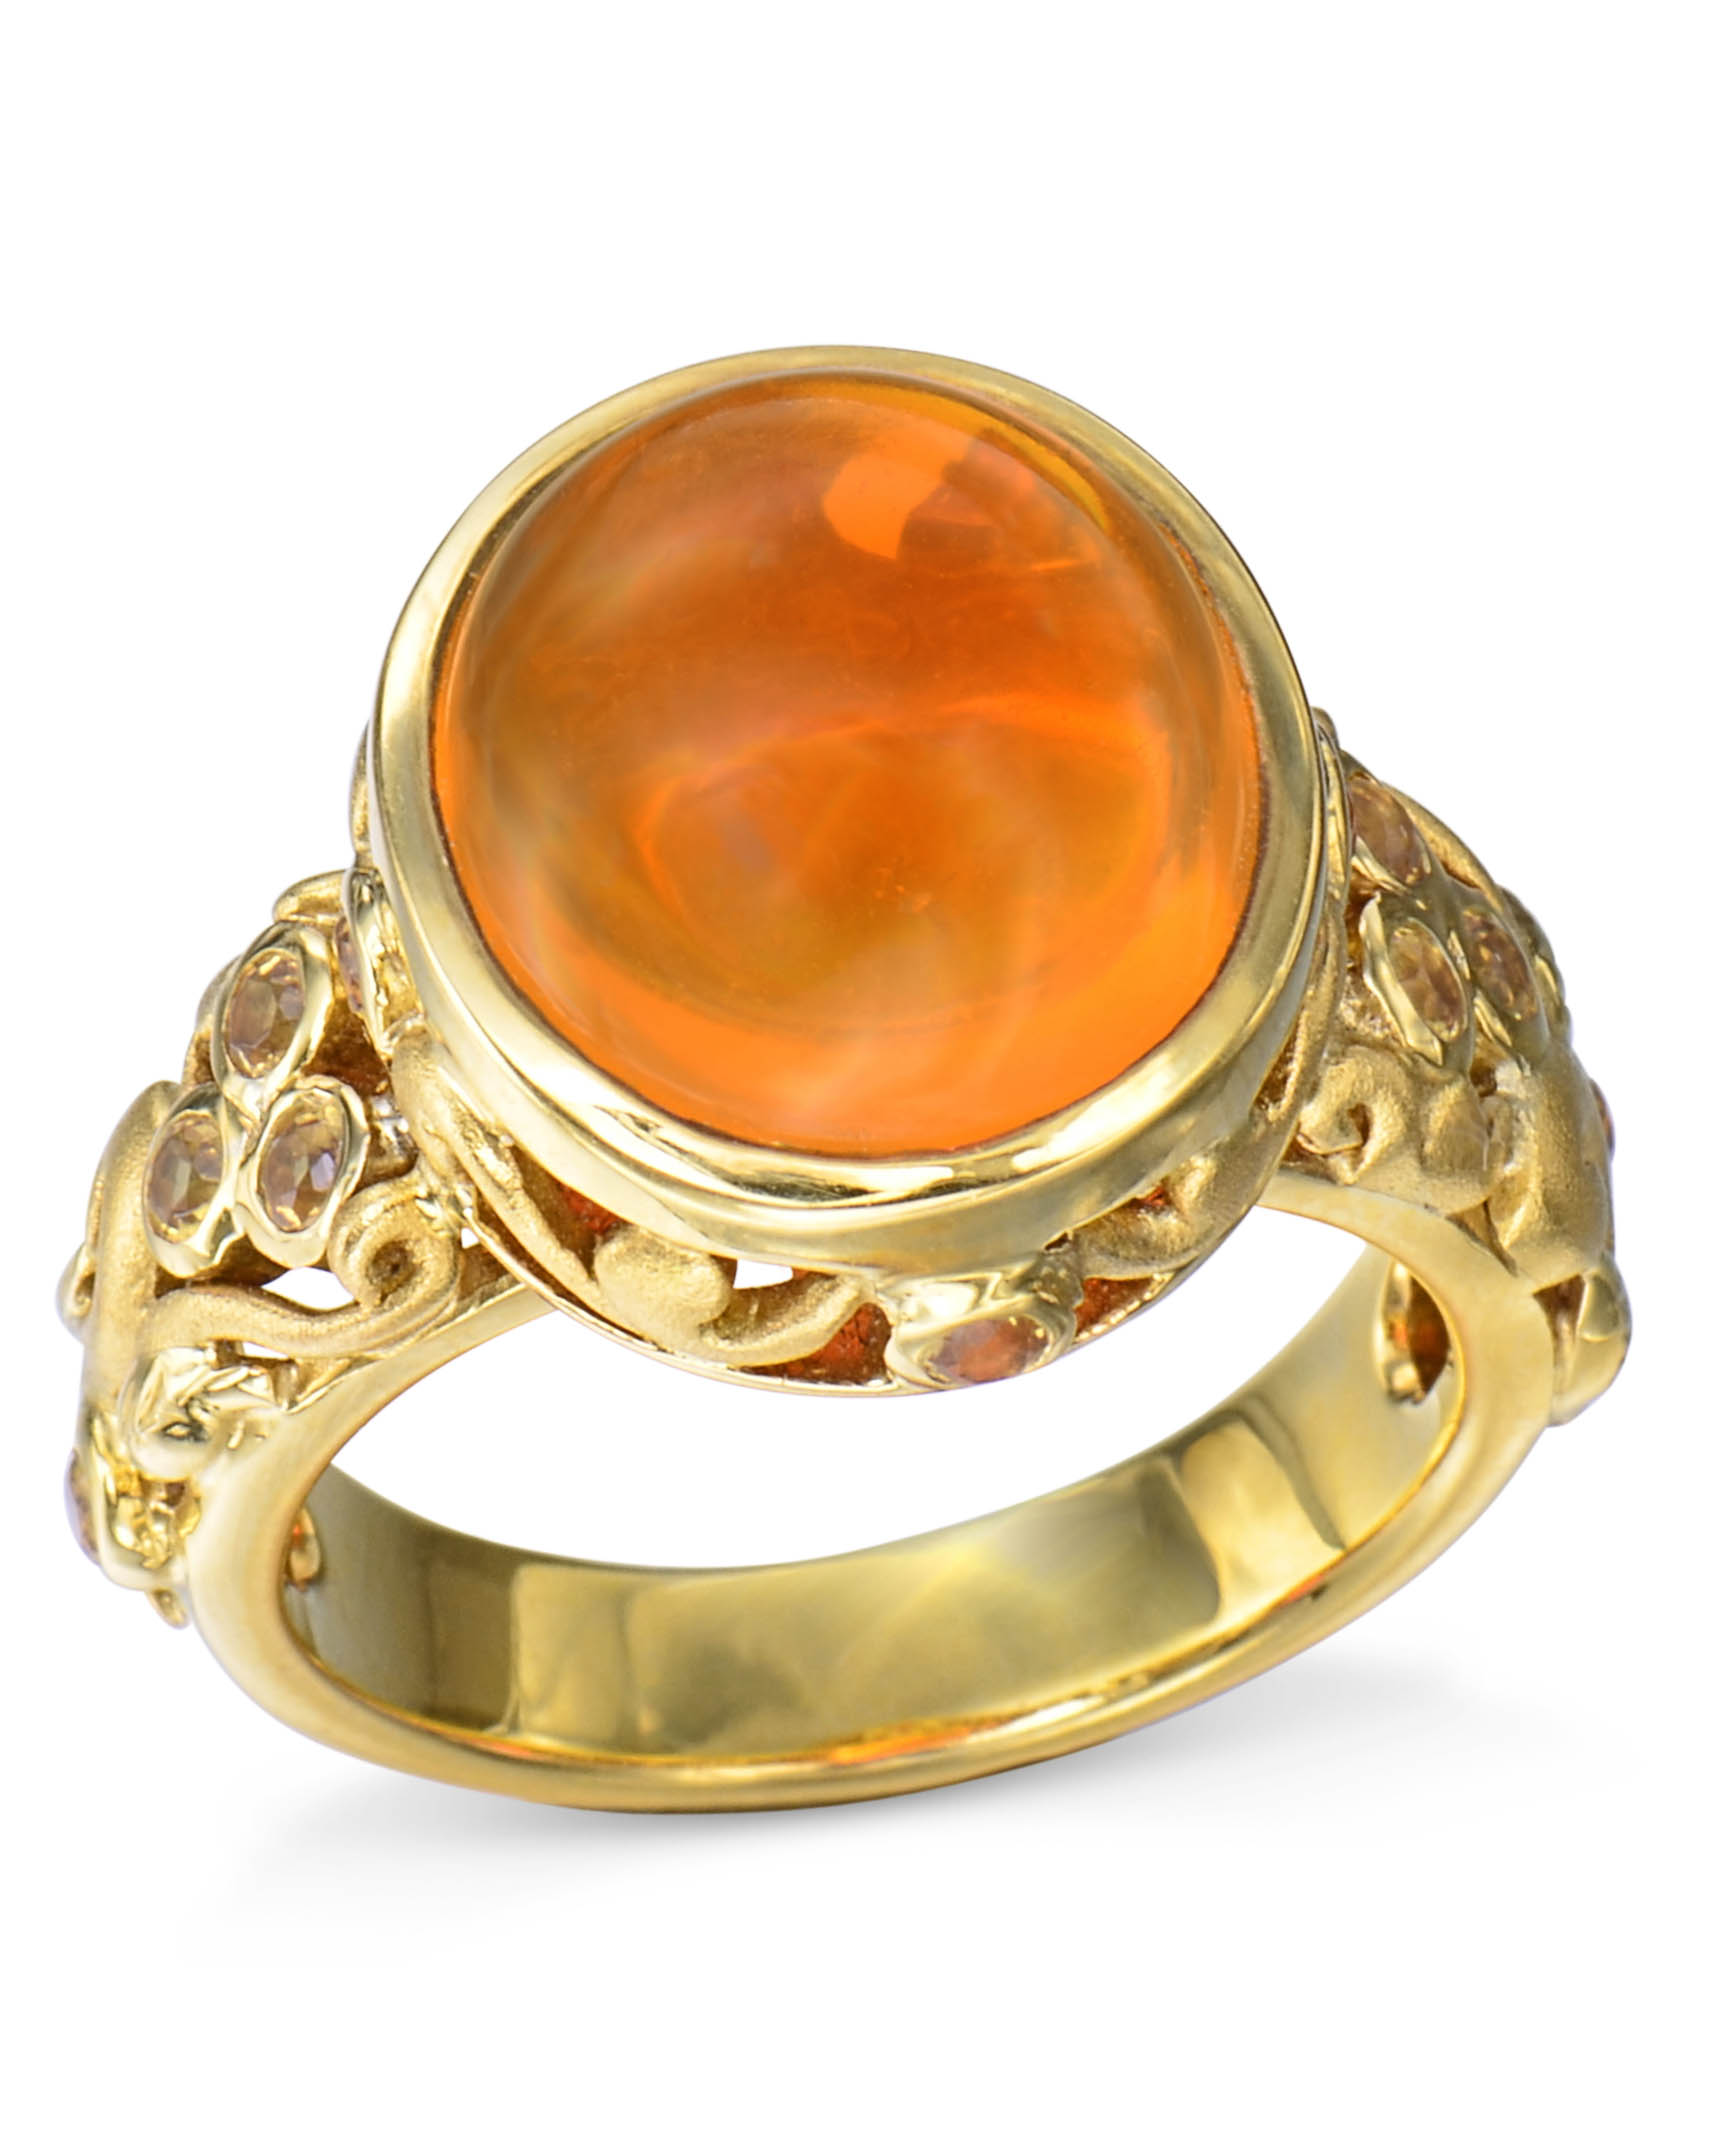 Opal And Citrine Jewelry - The Best Original Gemstone